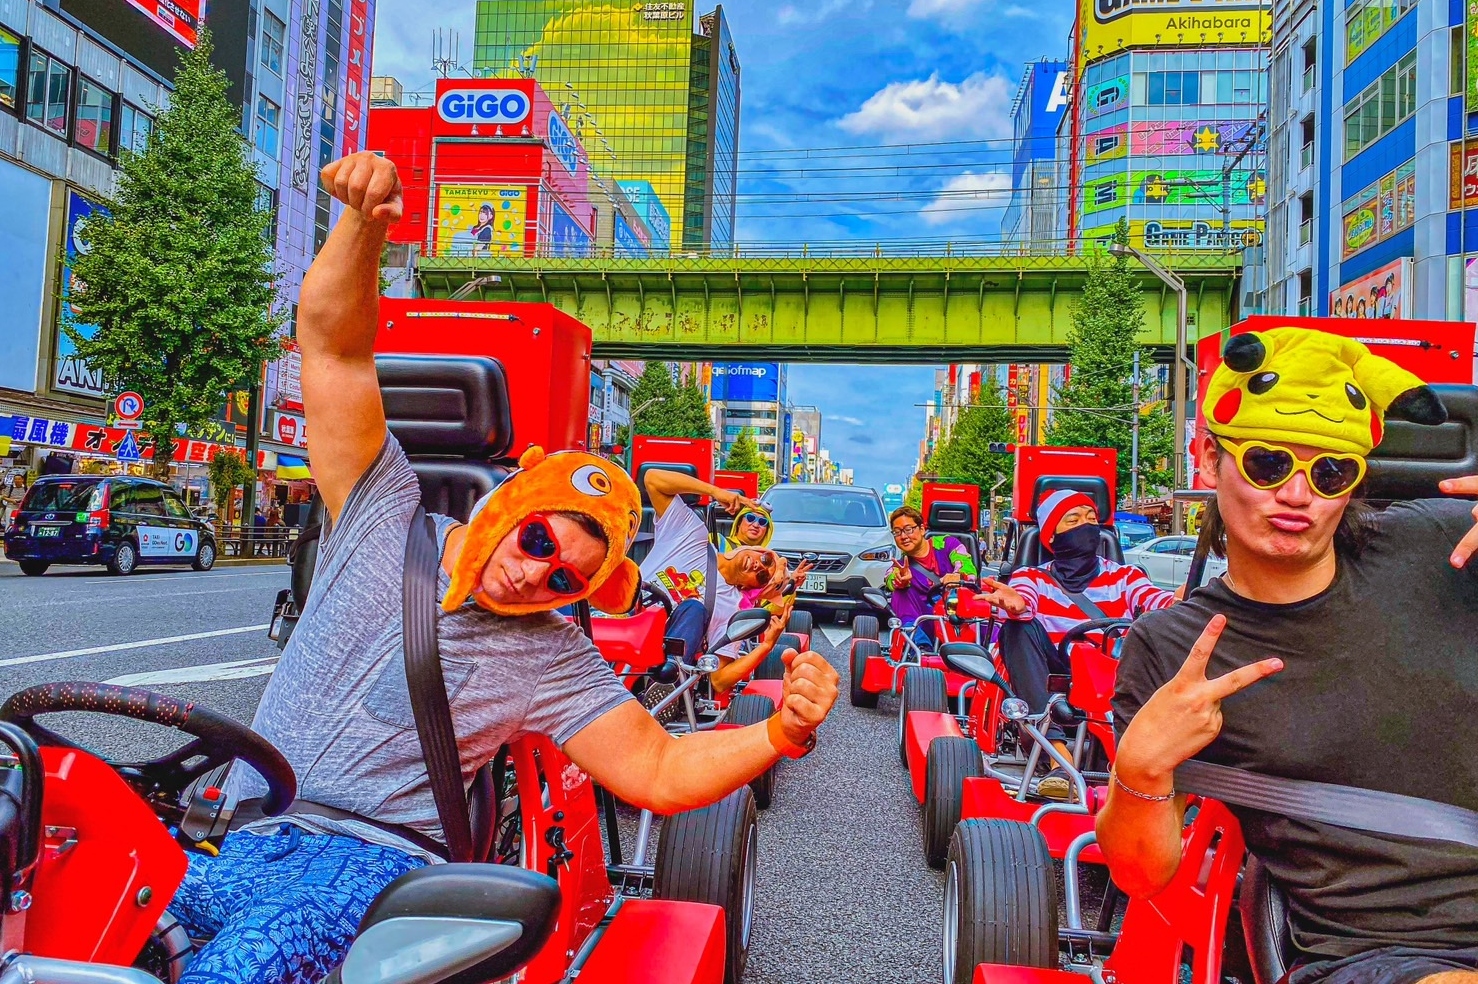 Tokyo Street Go Kart Experience In Akihabara By The Original Street Kart And Welcome Suica